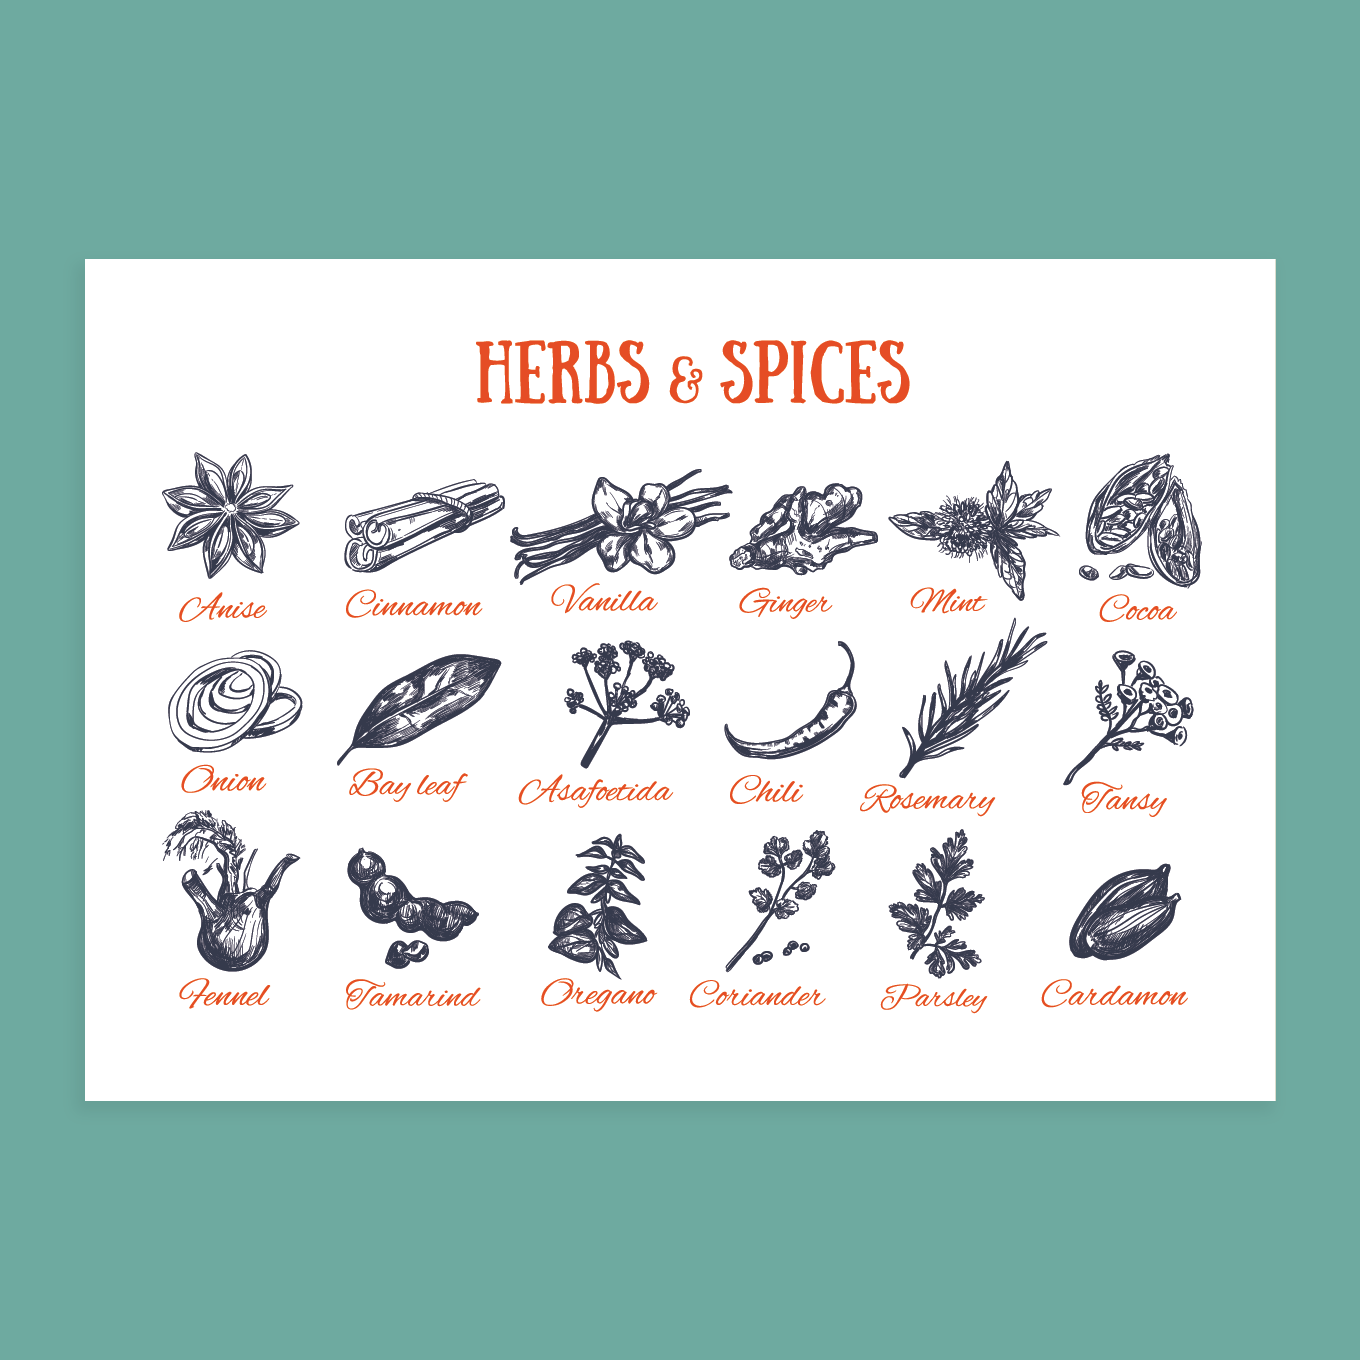 Herbs & Spices Poster Sticker